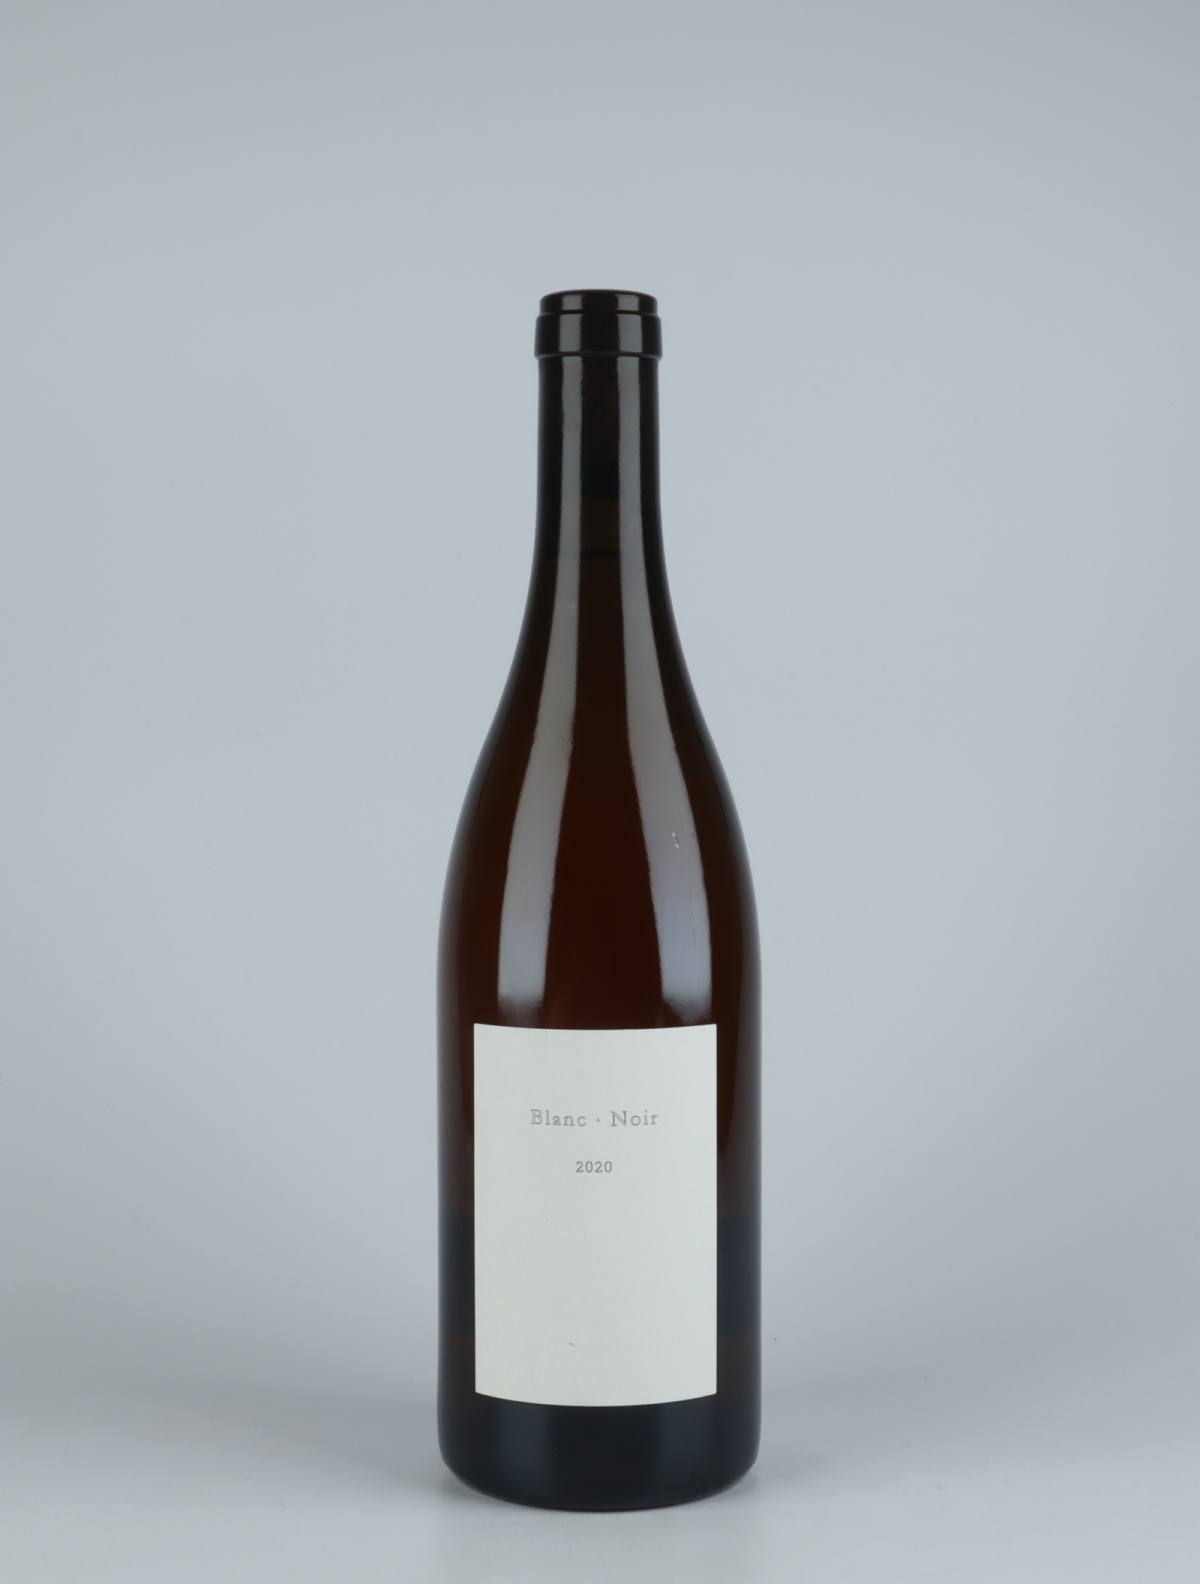 A bottle 2020 Blanc.Noir White wine from Les Frères Soulier, Rhône in France